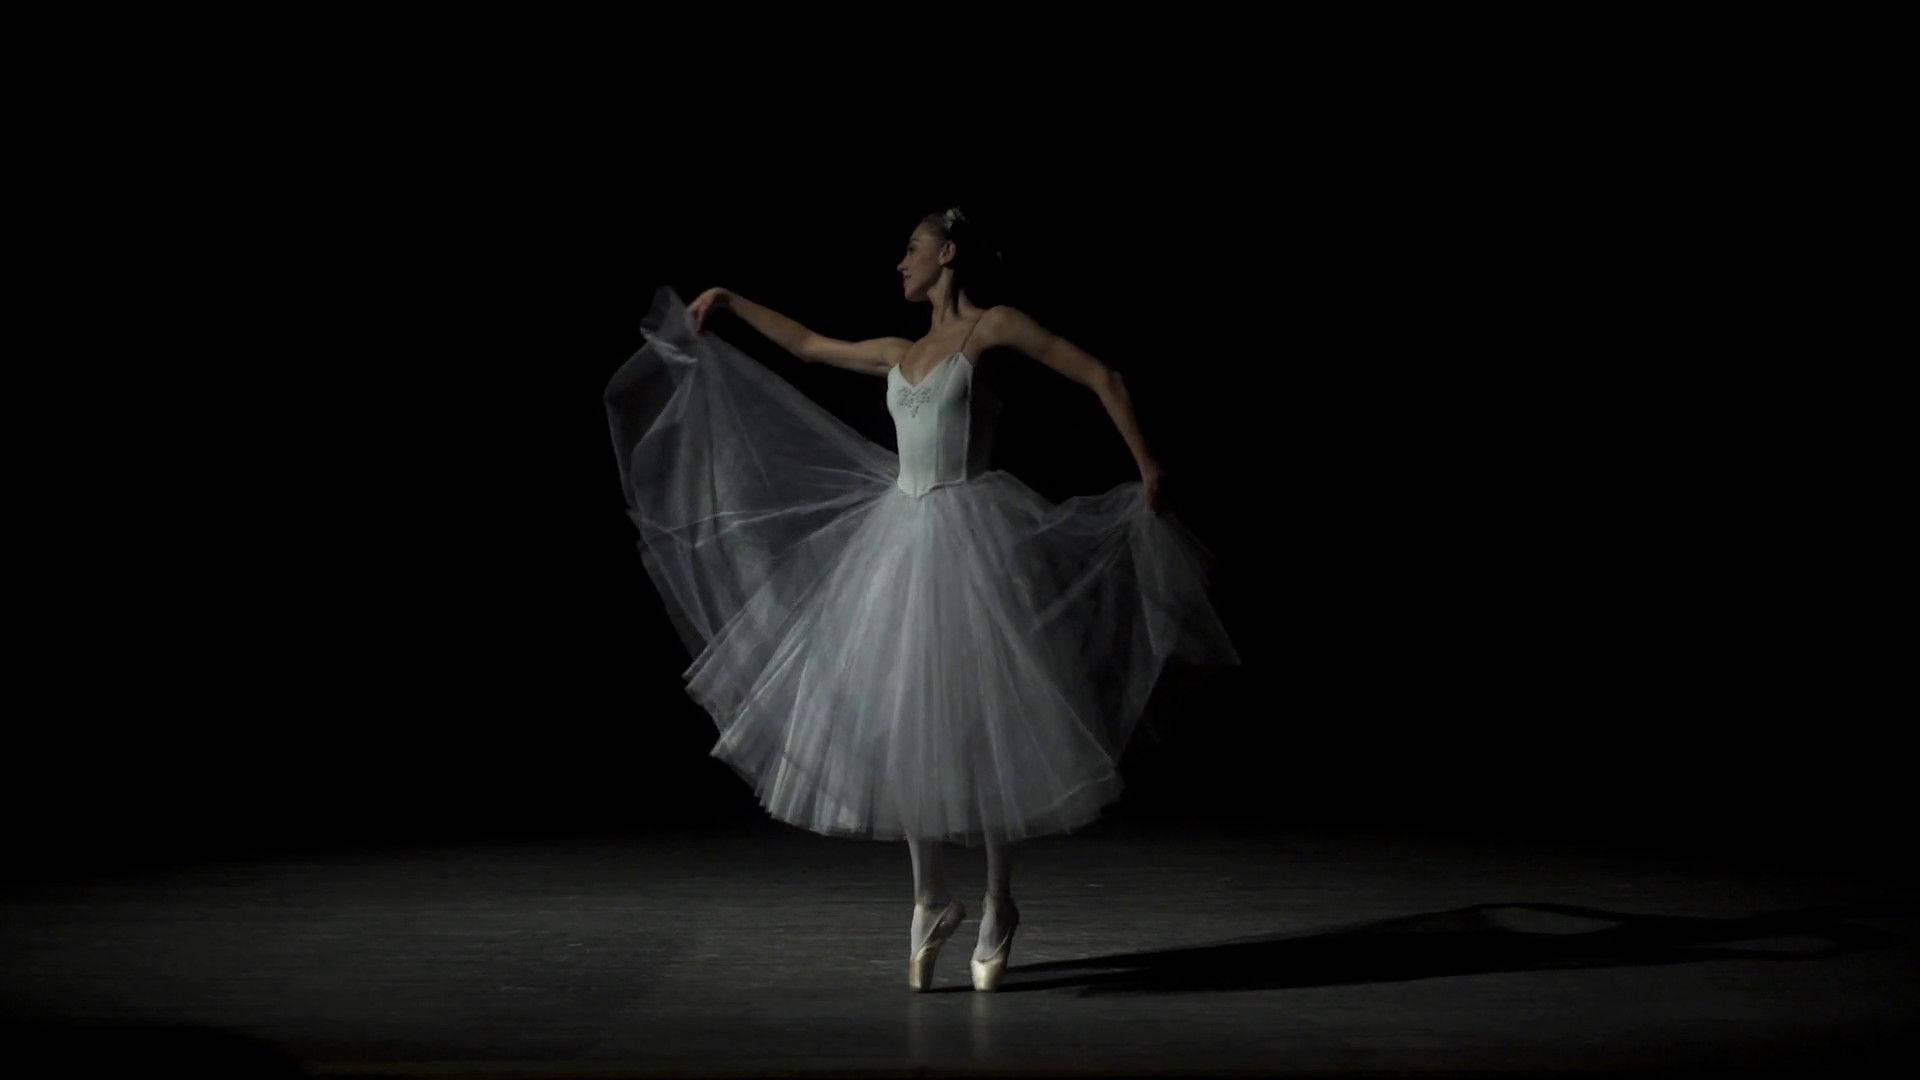 "Grace in Motion - Ballet Dancer in Exquisite Pose" Wallpaper